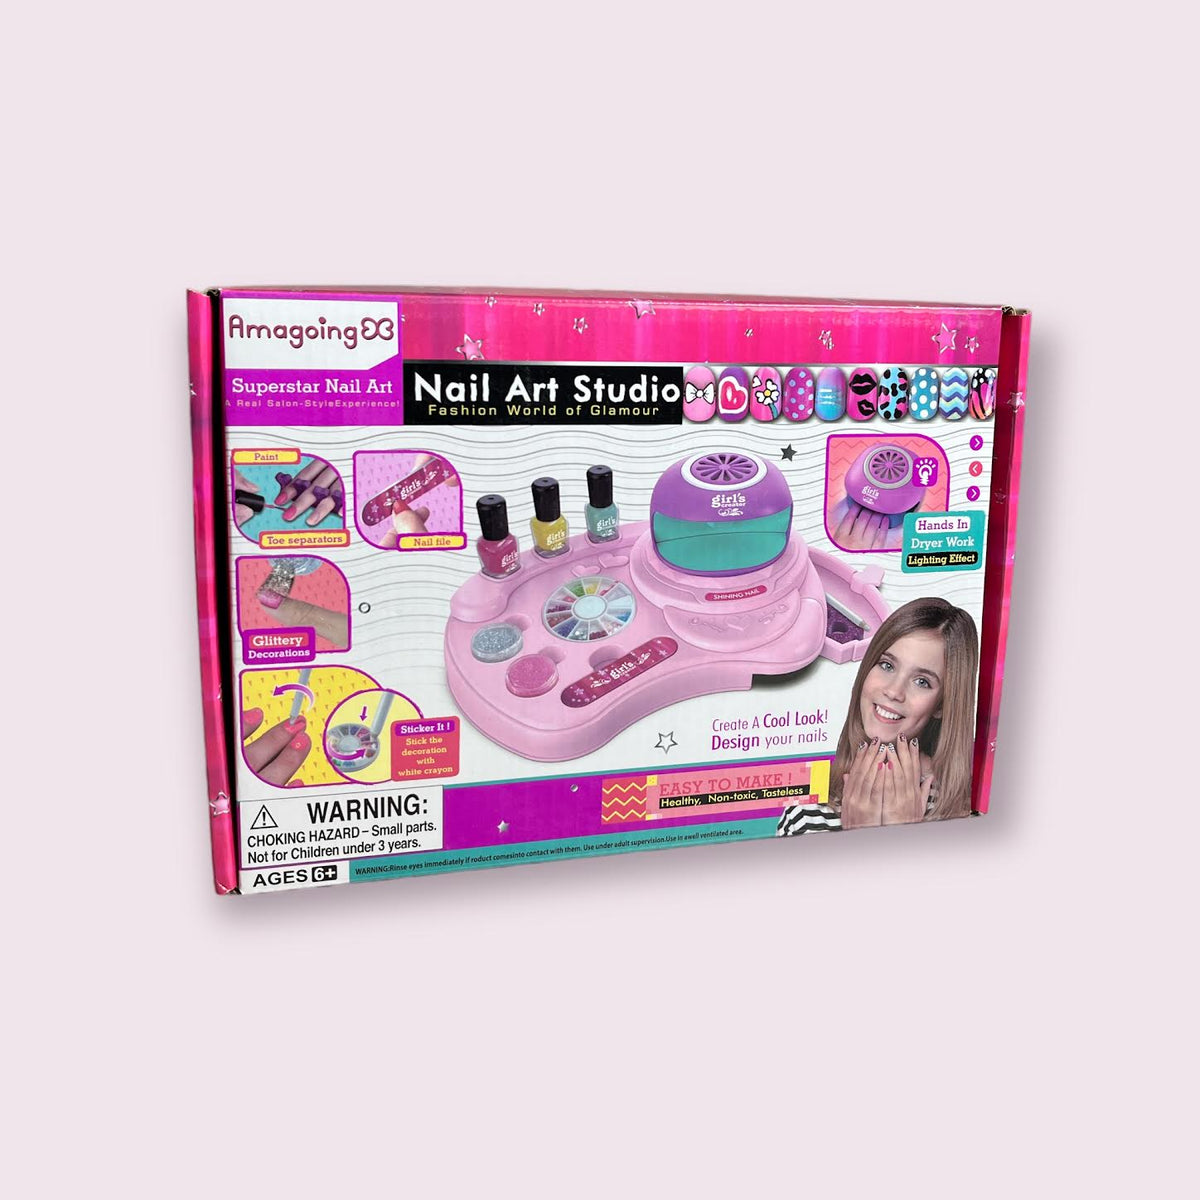 Amagoing Nail Art Kit for Girls Kids Nail Polish Play Set with